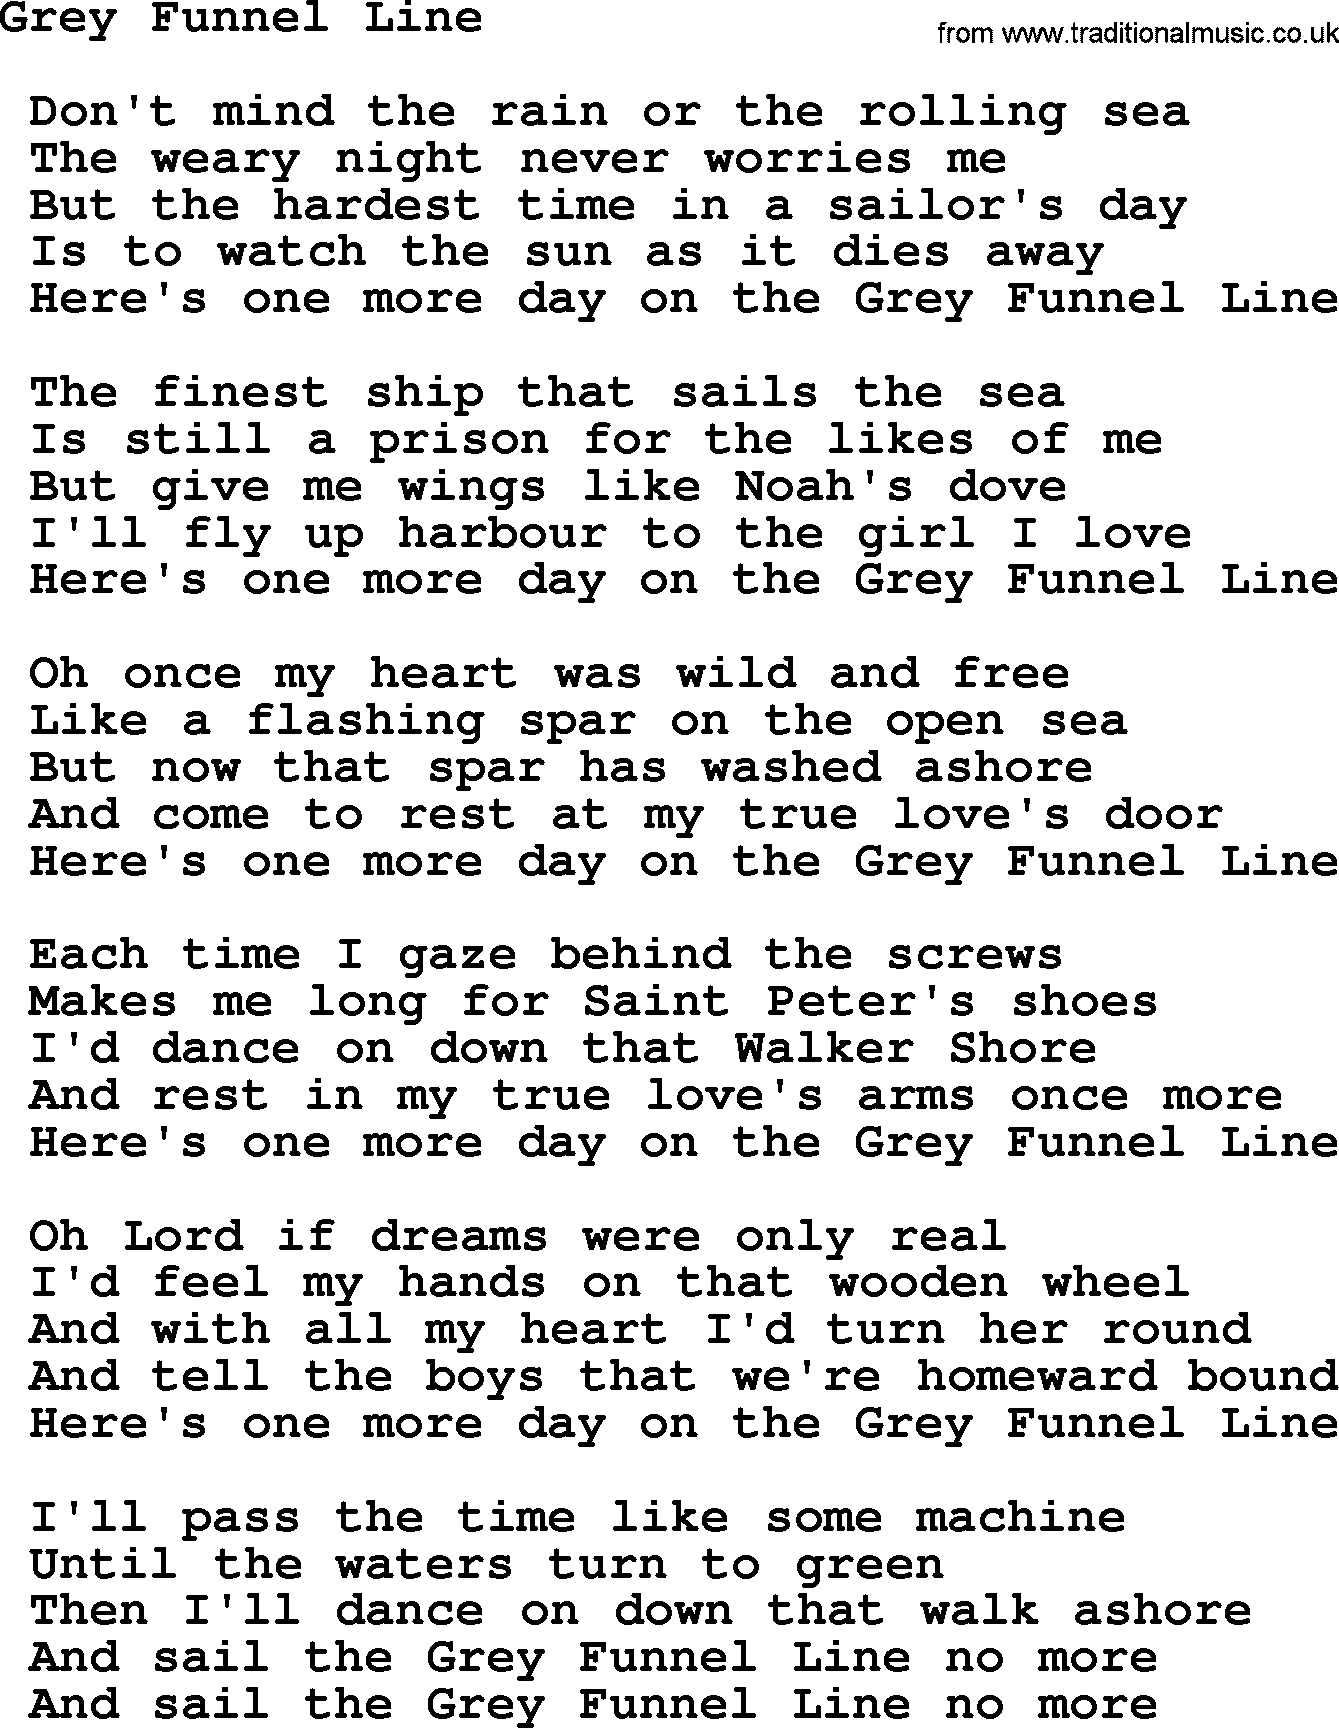 Sea Song or Shantie: Grey Funnel Line, lyrics